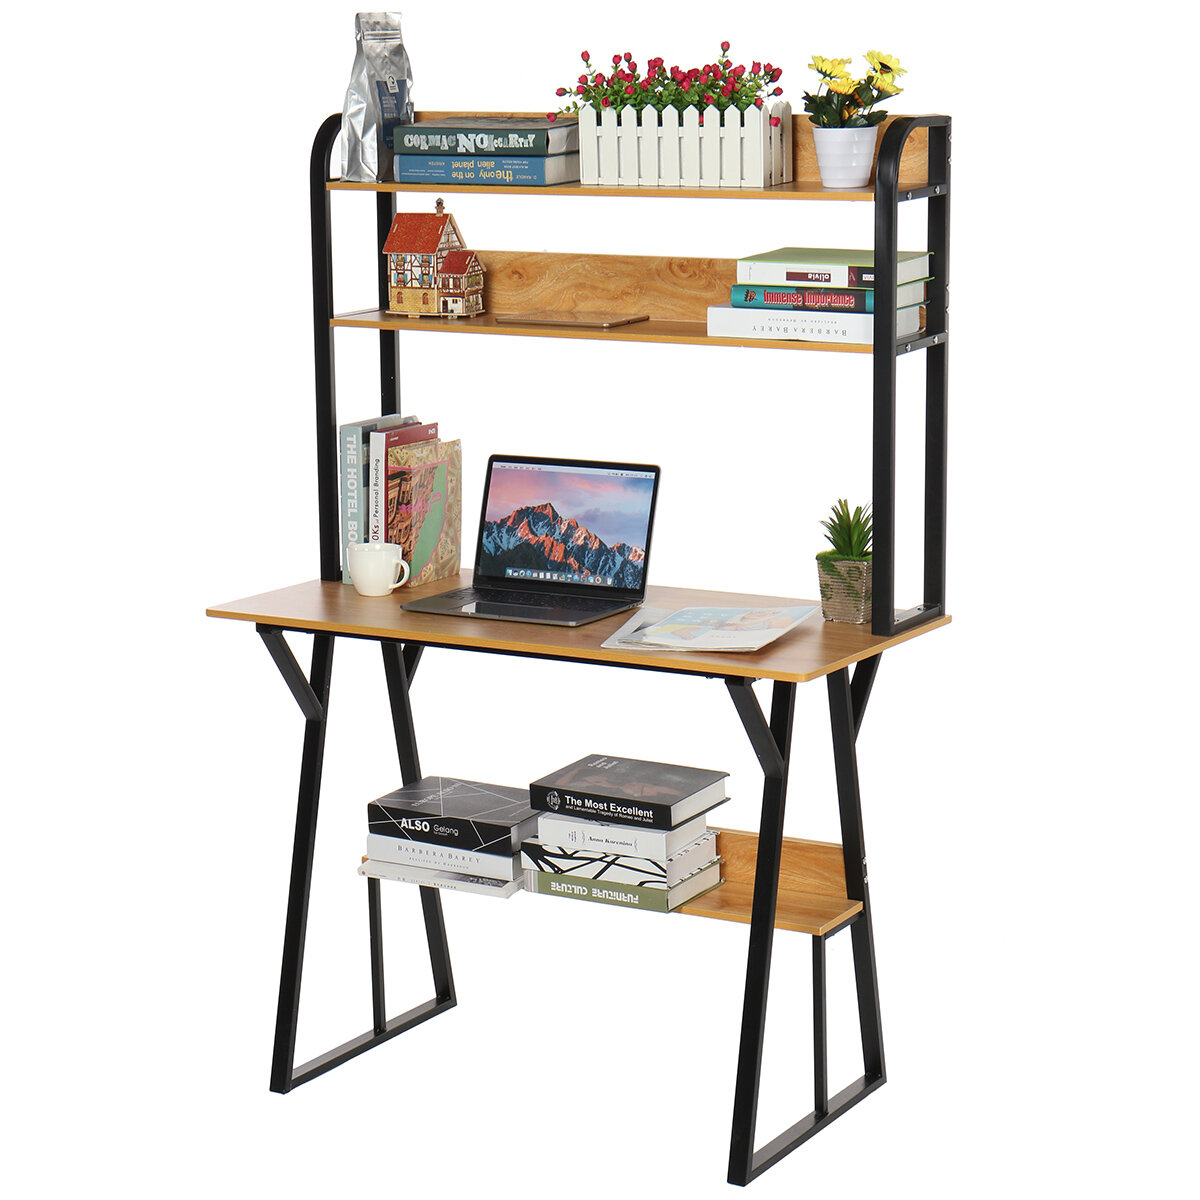 2 in 1 Computer Desk Storage Shelf Modren Student Writing Study Table Office Workstation Home Laptop Desk Bookshelf